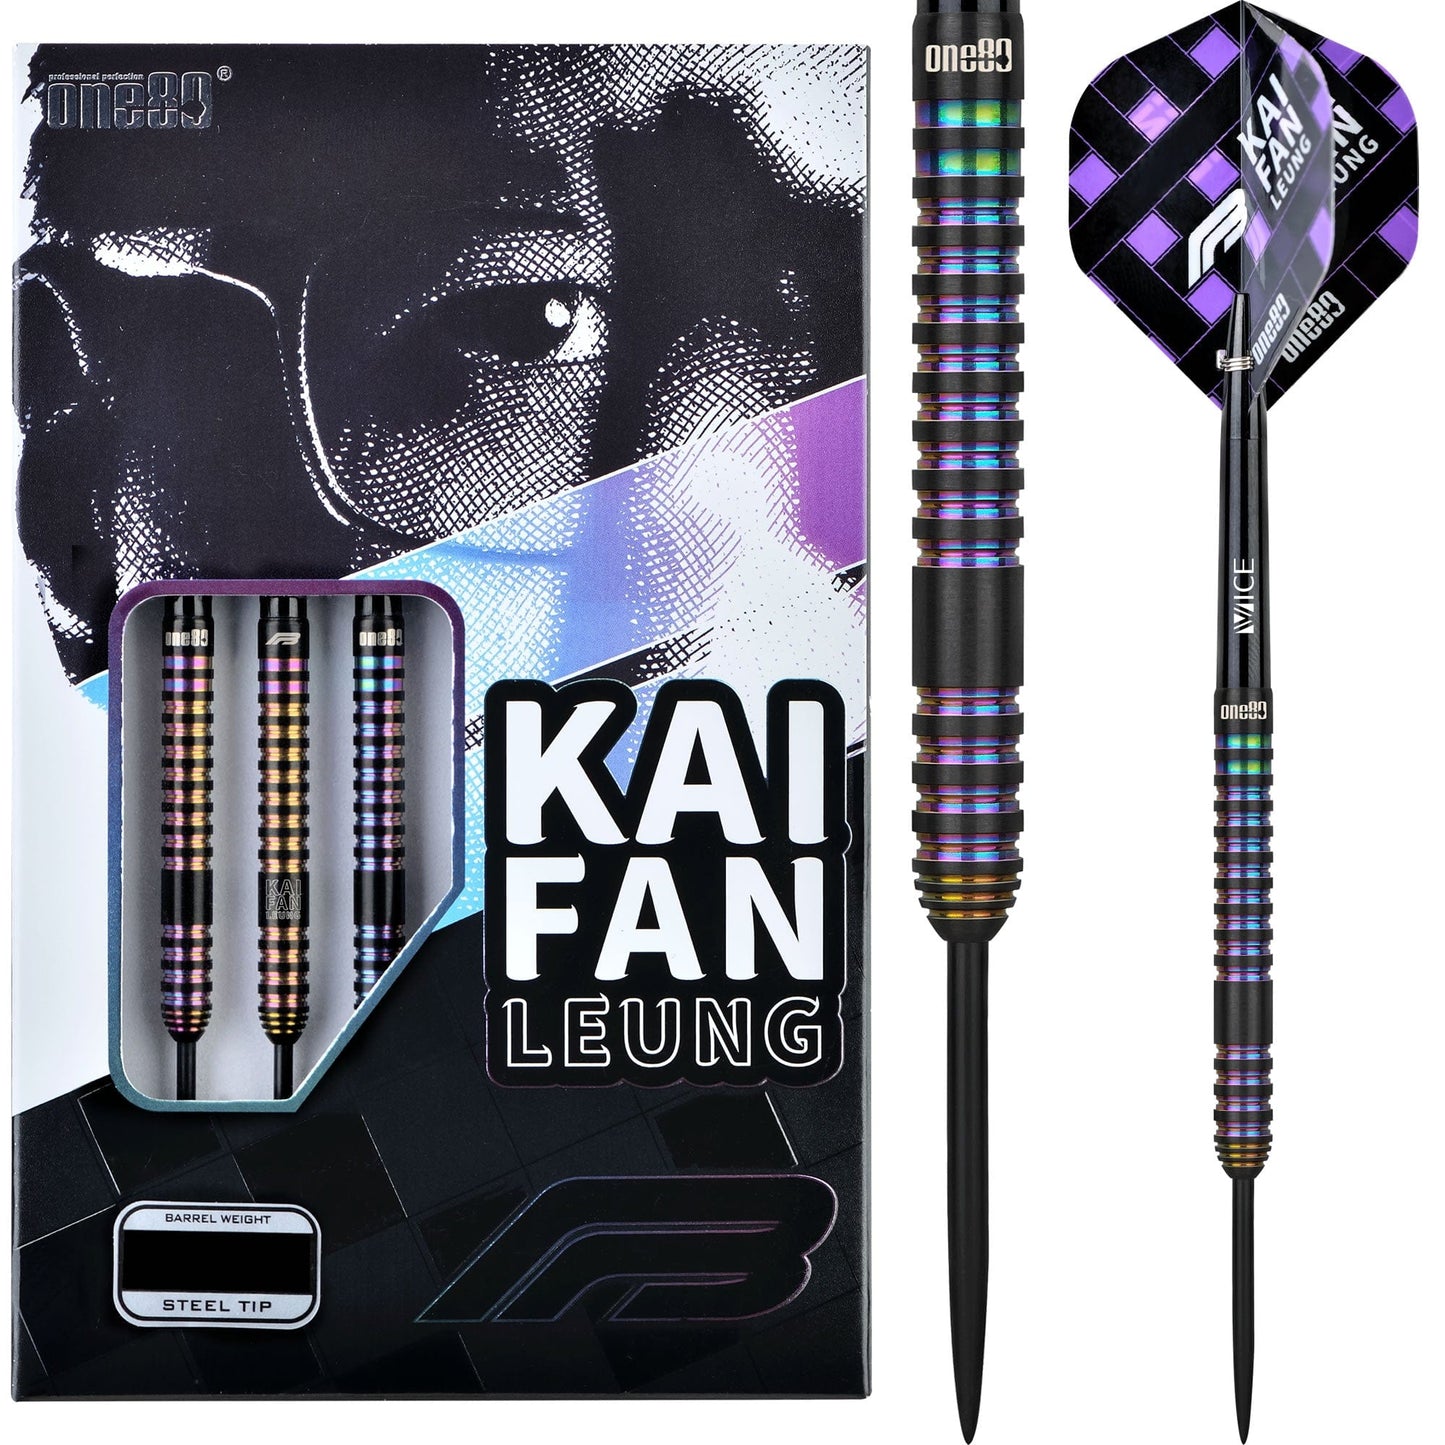 One80 FB Kai Fan Leung Darts - Steel Tip - V2 Signature - Rainbow Black 22g